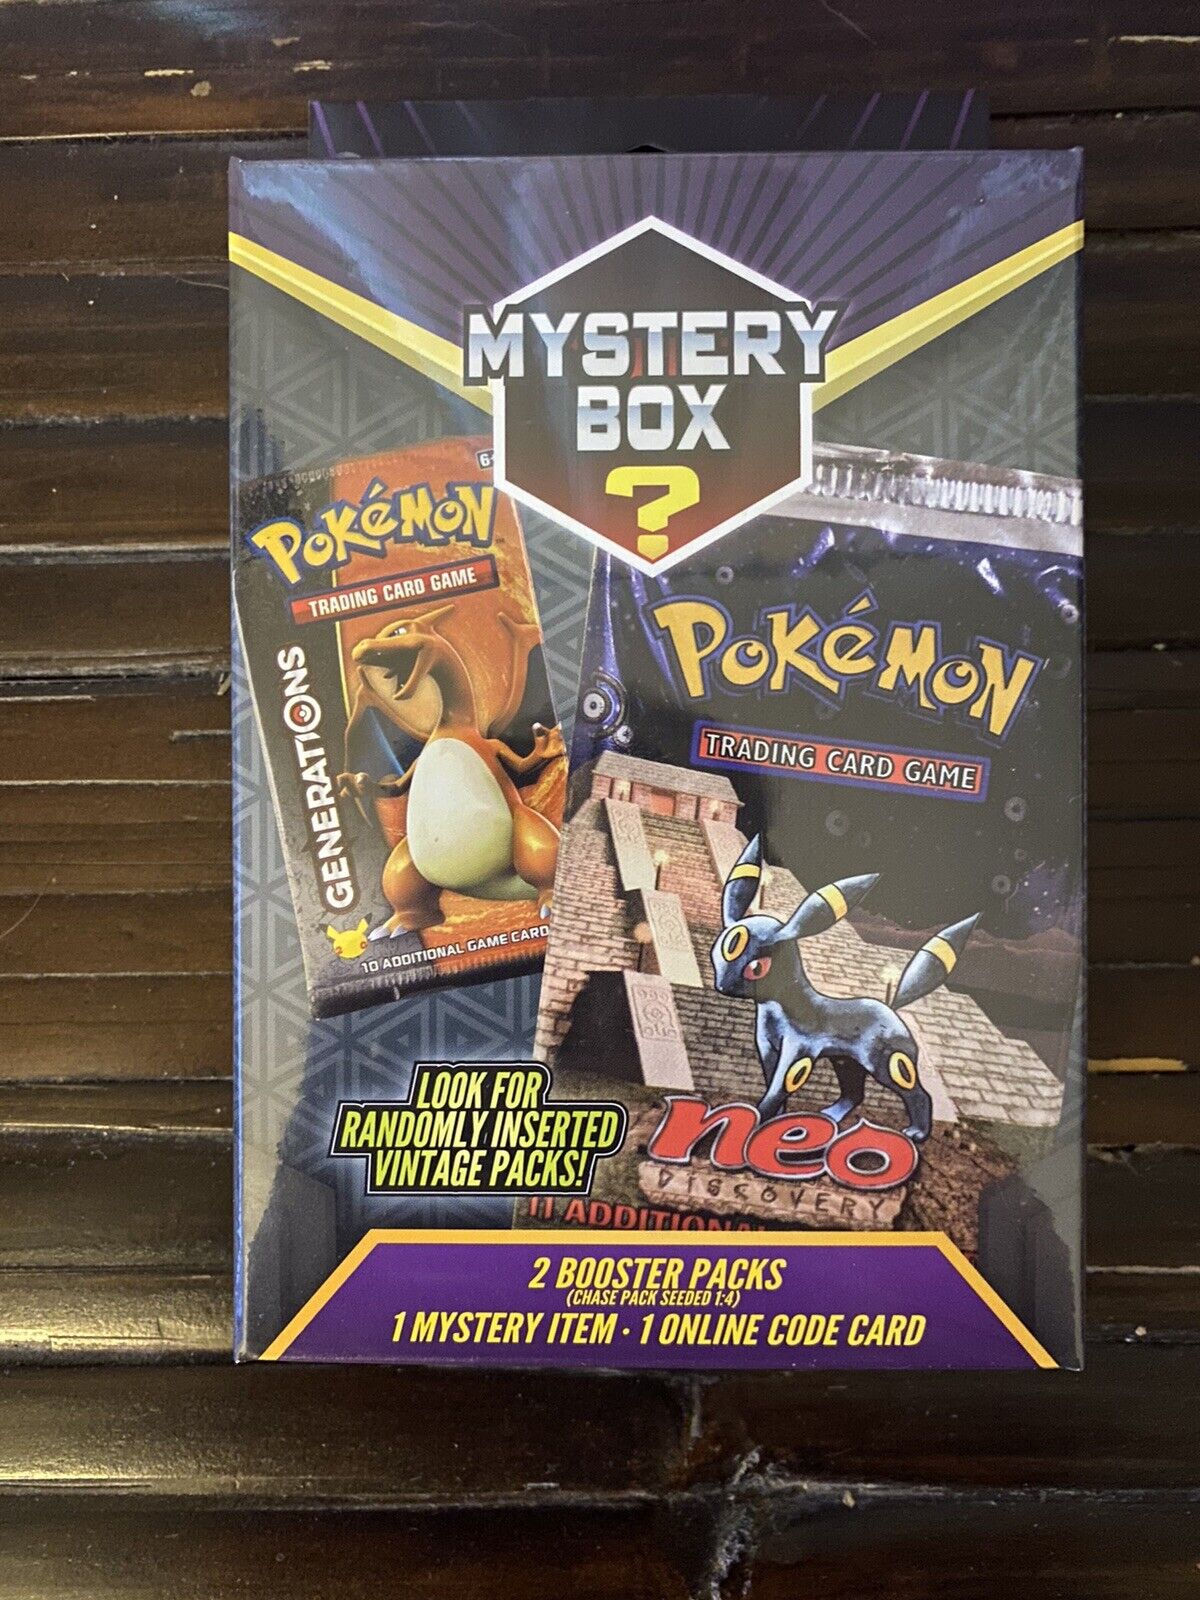 Pokemon Mystery Hanger Box Walmart Vintage Packs Seeded 1:4 Factory Sealed 